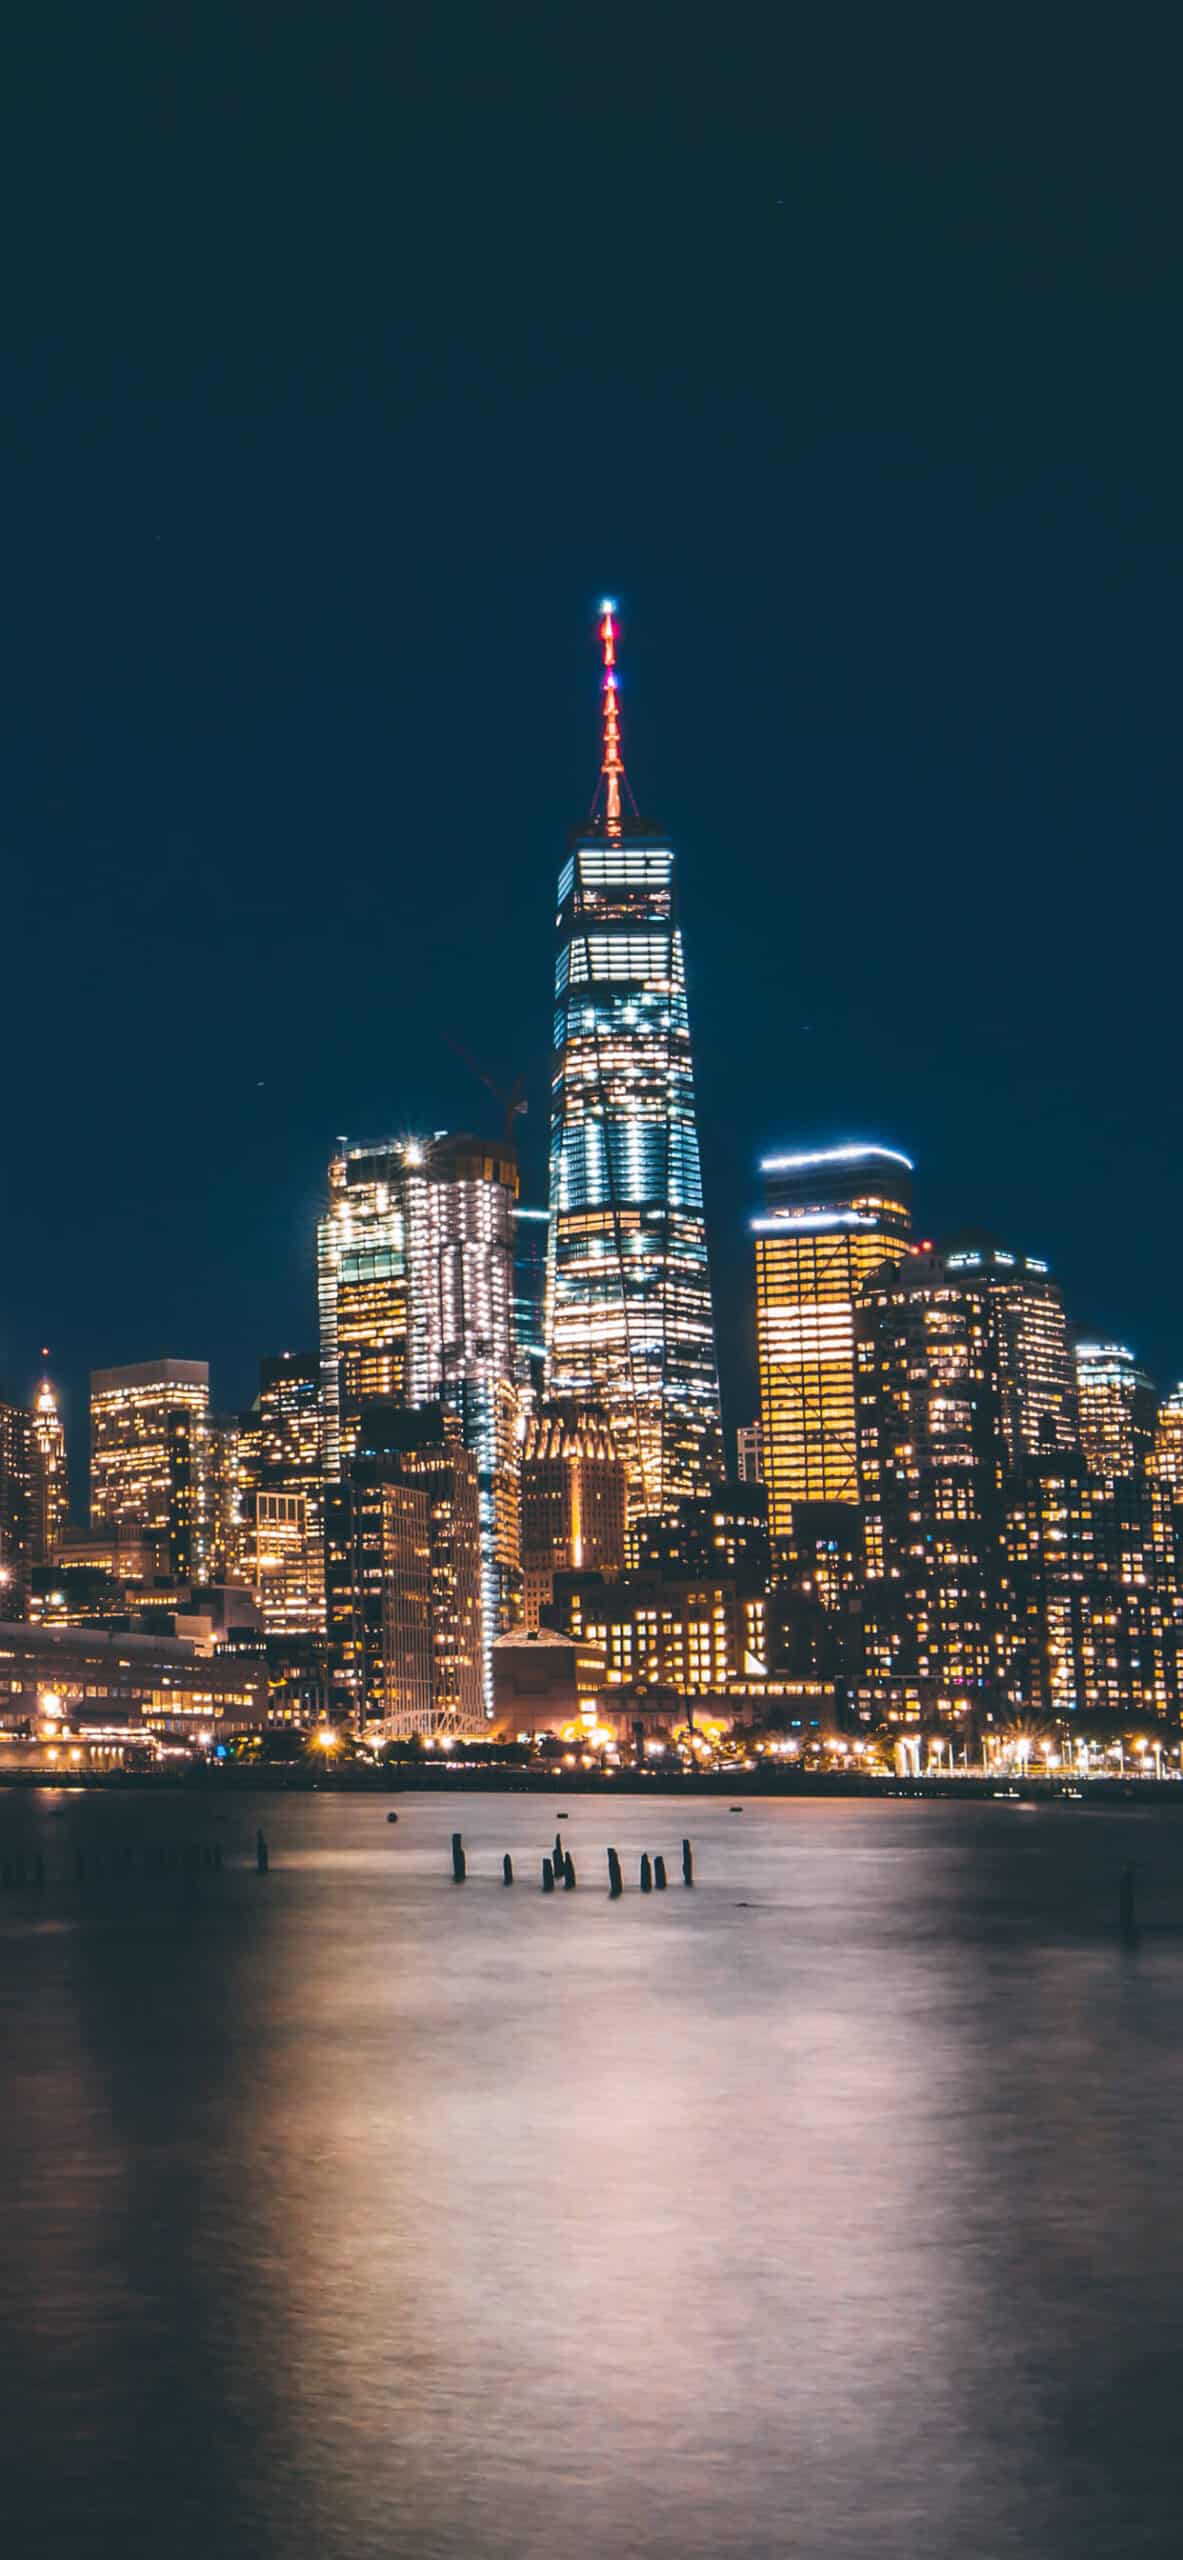 New York City Lights iPhone XS Max Wallpaper